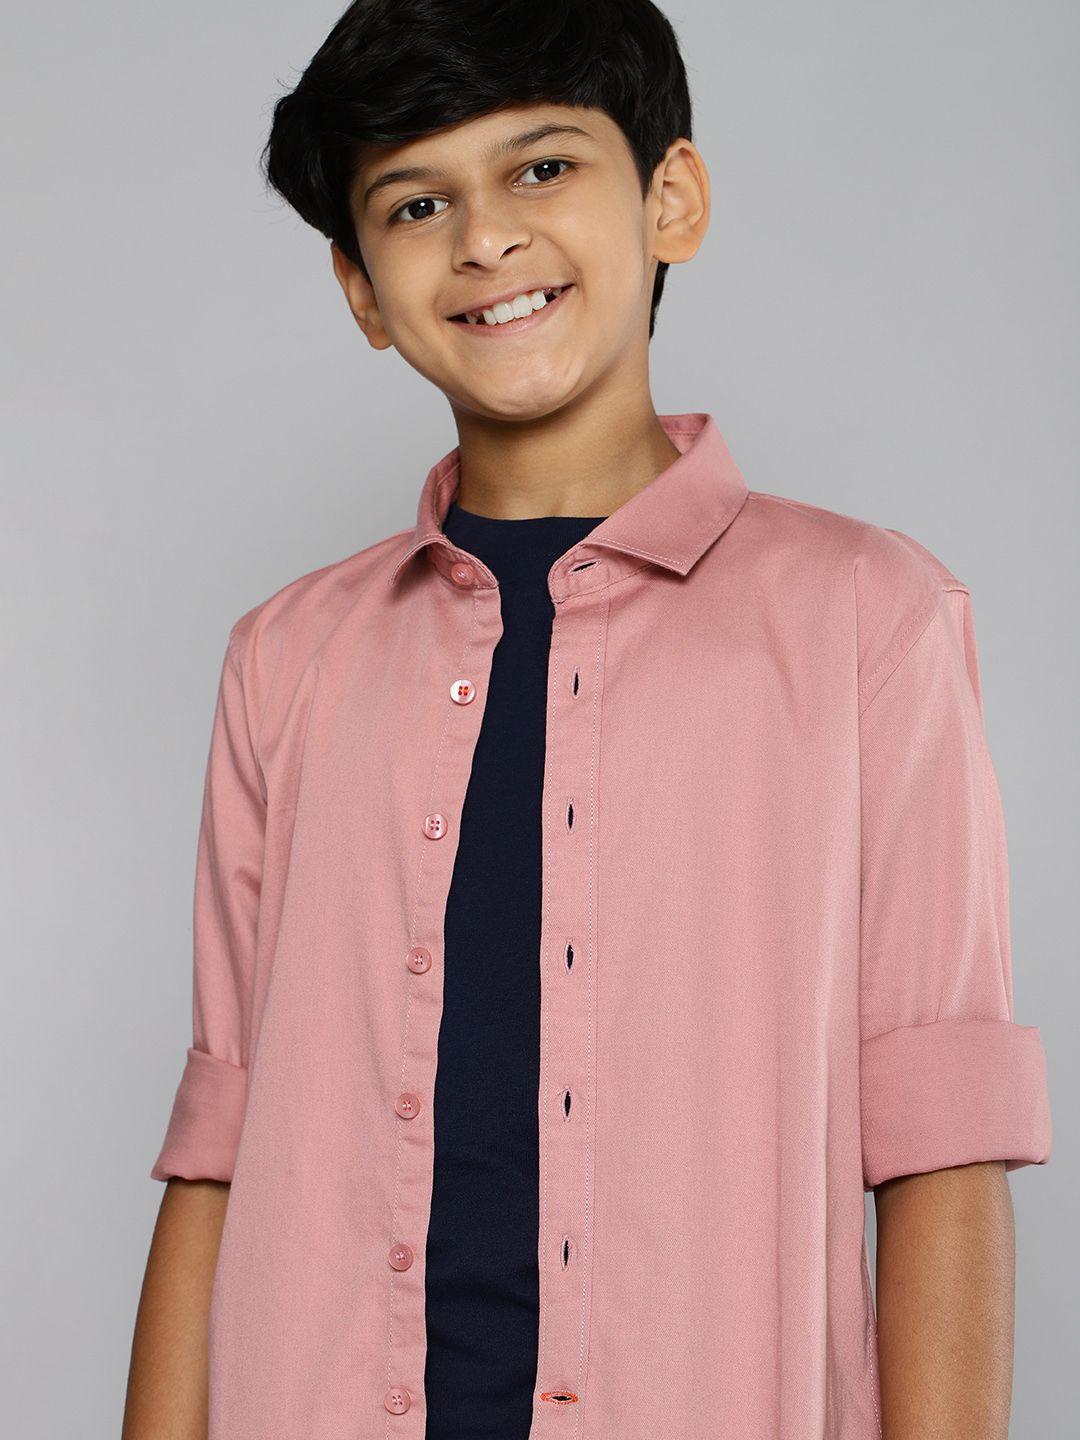 m&h juniors boys pink slim fit pure cotton casual shirt